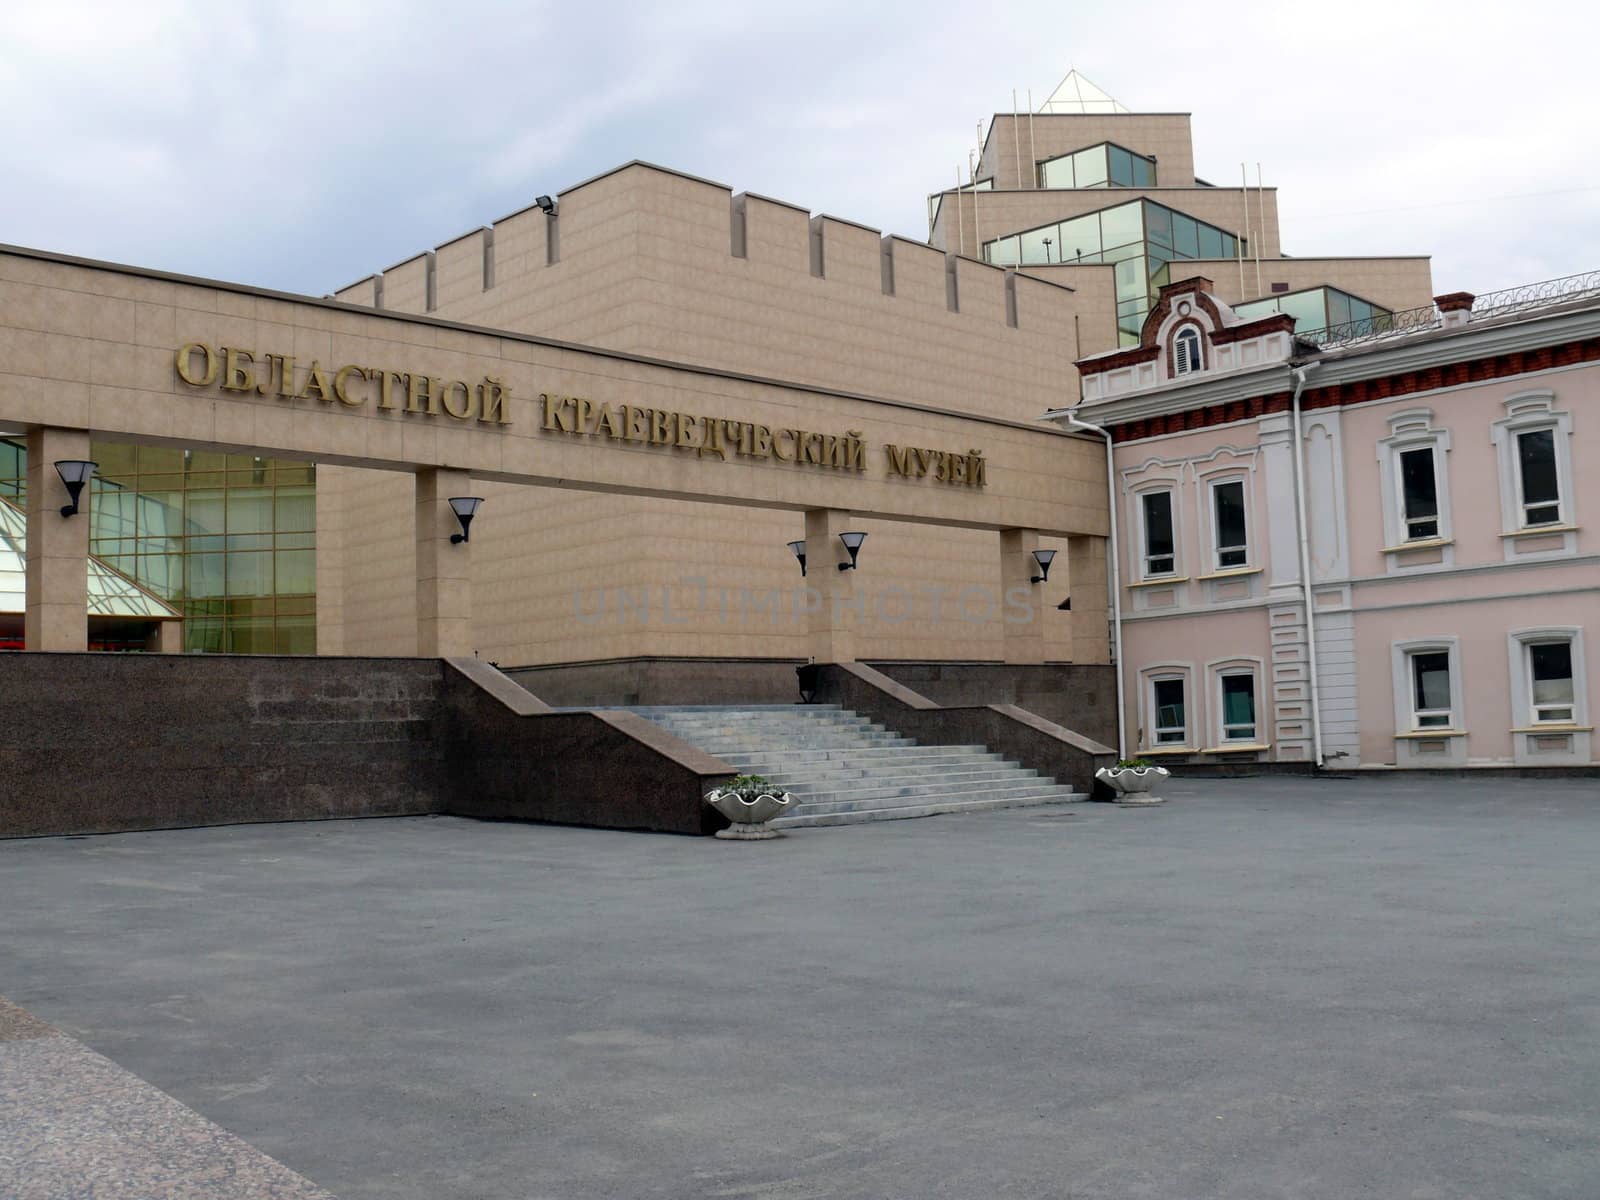 Museum of local history - Chelyabinsk